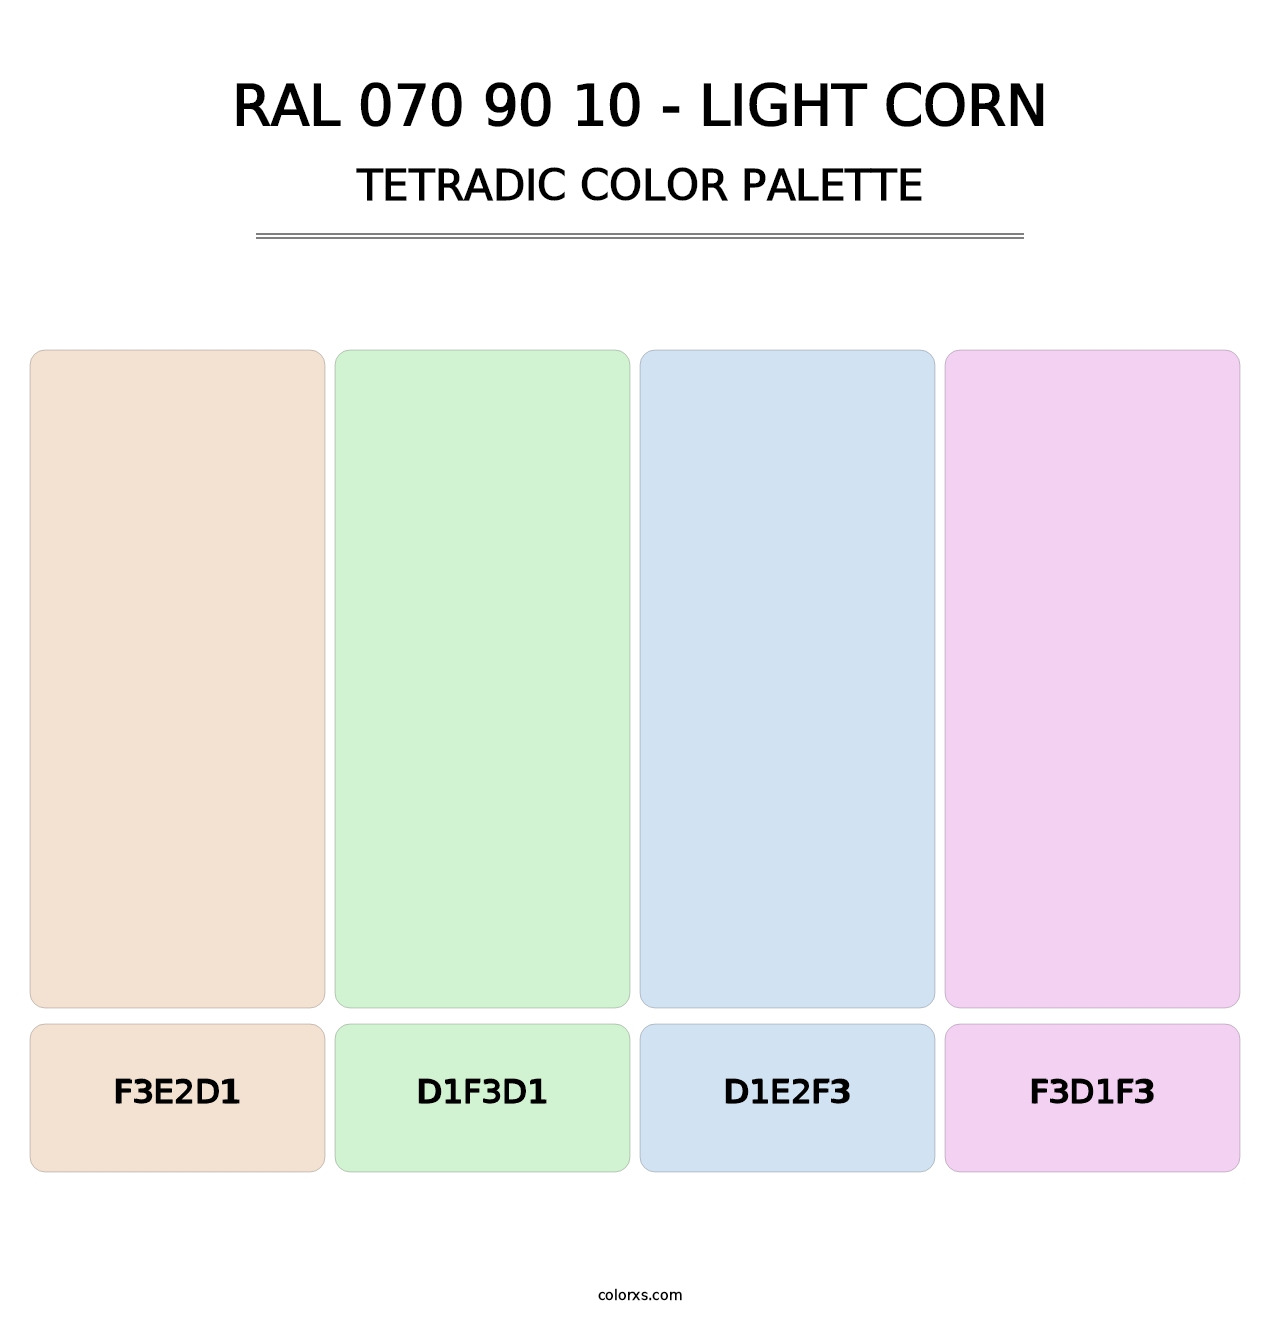 RAL 070 90 10 - Light Corn - Tetradic Color Palette